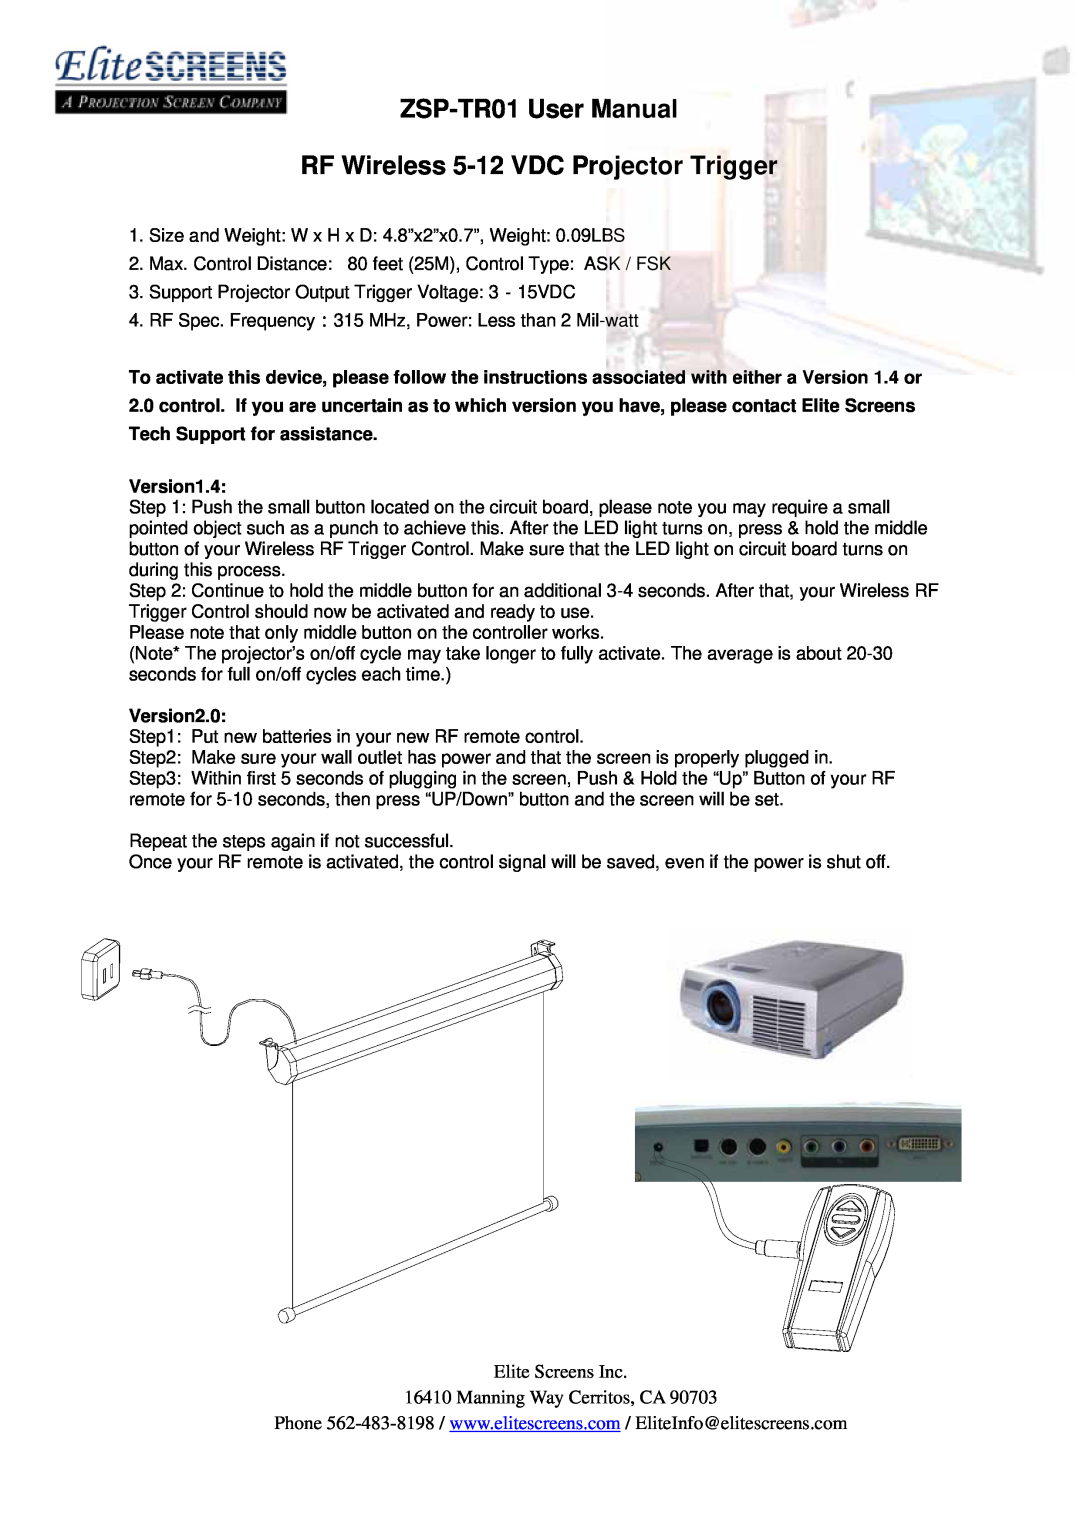 Elite Screens user manual ZSP-TR01 User Manual RF Wireless 5-12 VDC Projector Trigger, Version1.4, Version2.0 